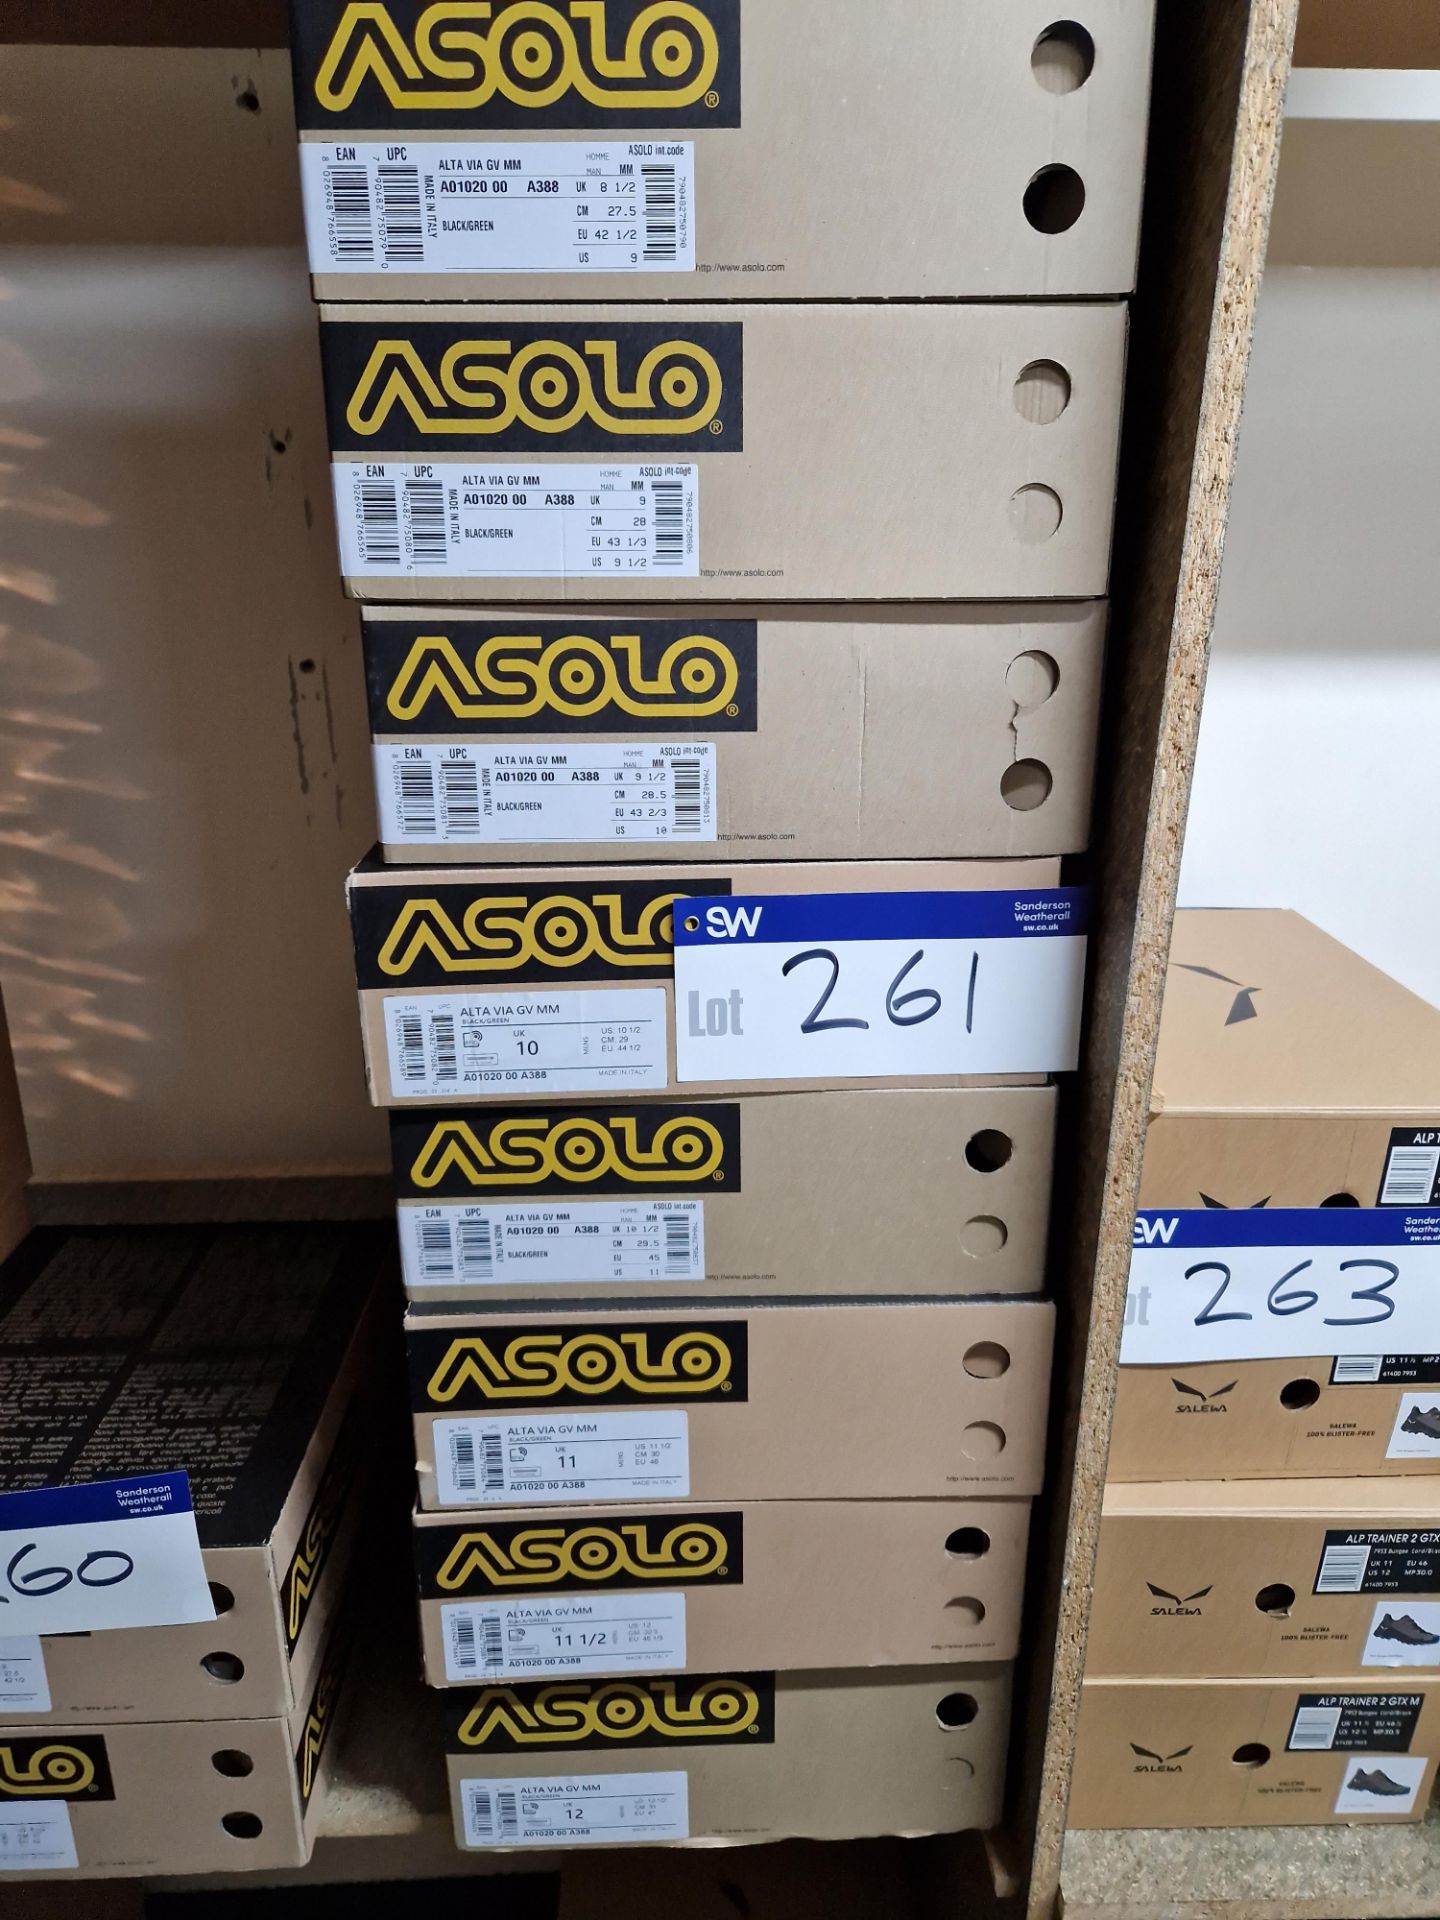 Eight Pairs of Asolo Alta VIA GV MM Boots, Colour: Black/Green, Sizes: 12 UK, 11.5 UK, 11 UK, 10.5